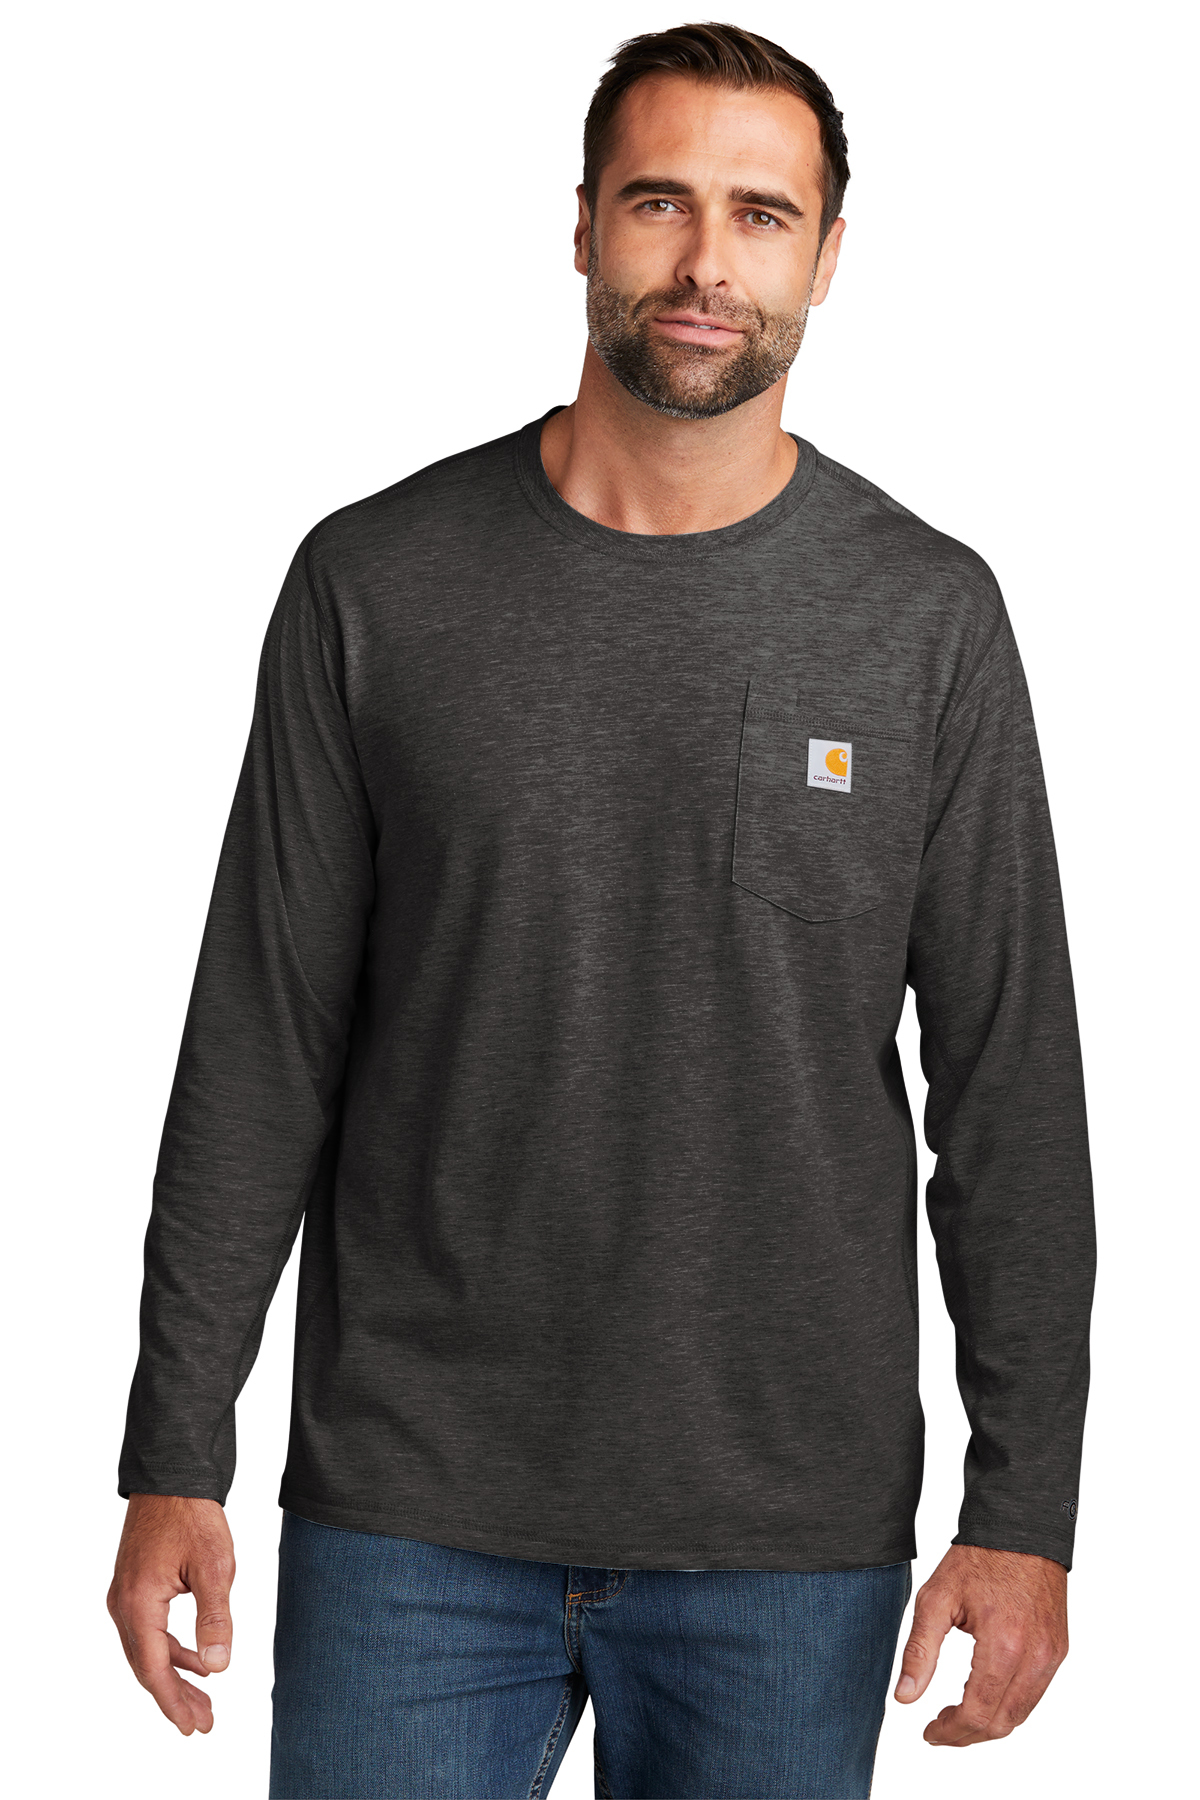 Carhartt Force Long Sleeve Pocket T-Shirt | Product | SanMar